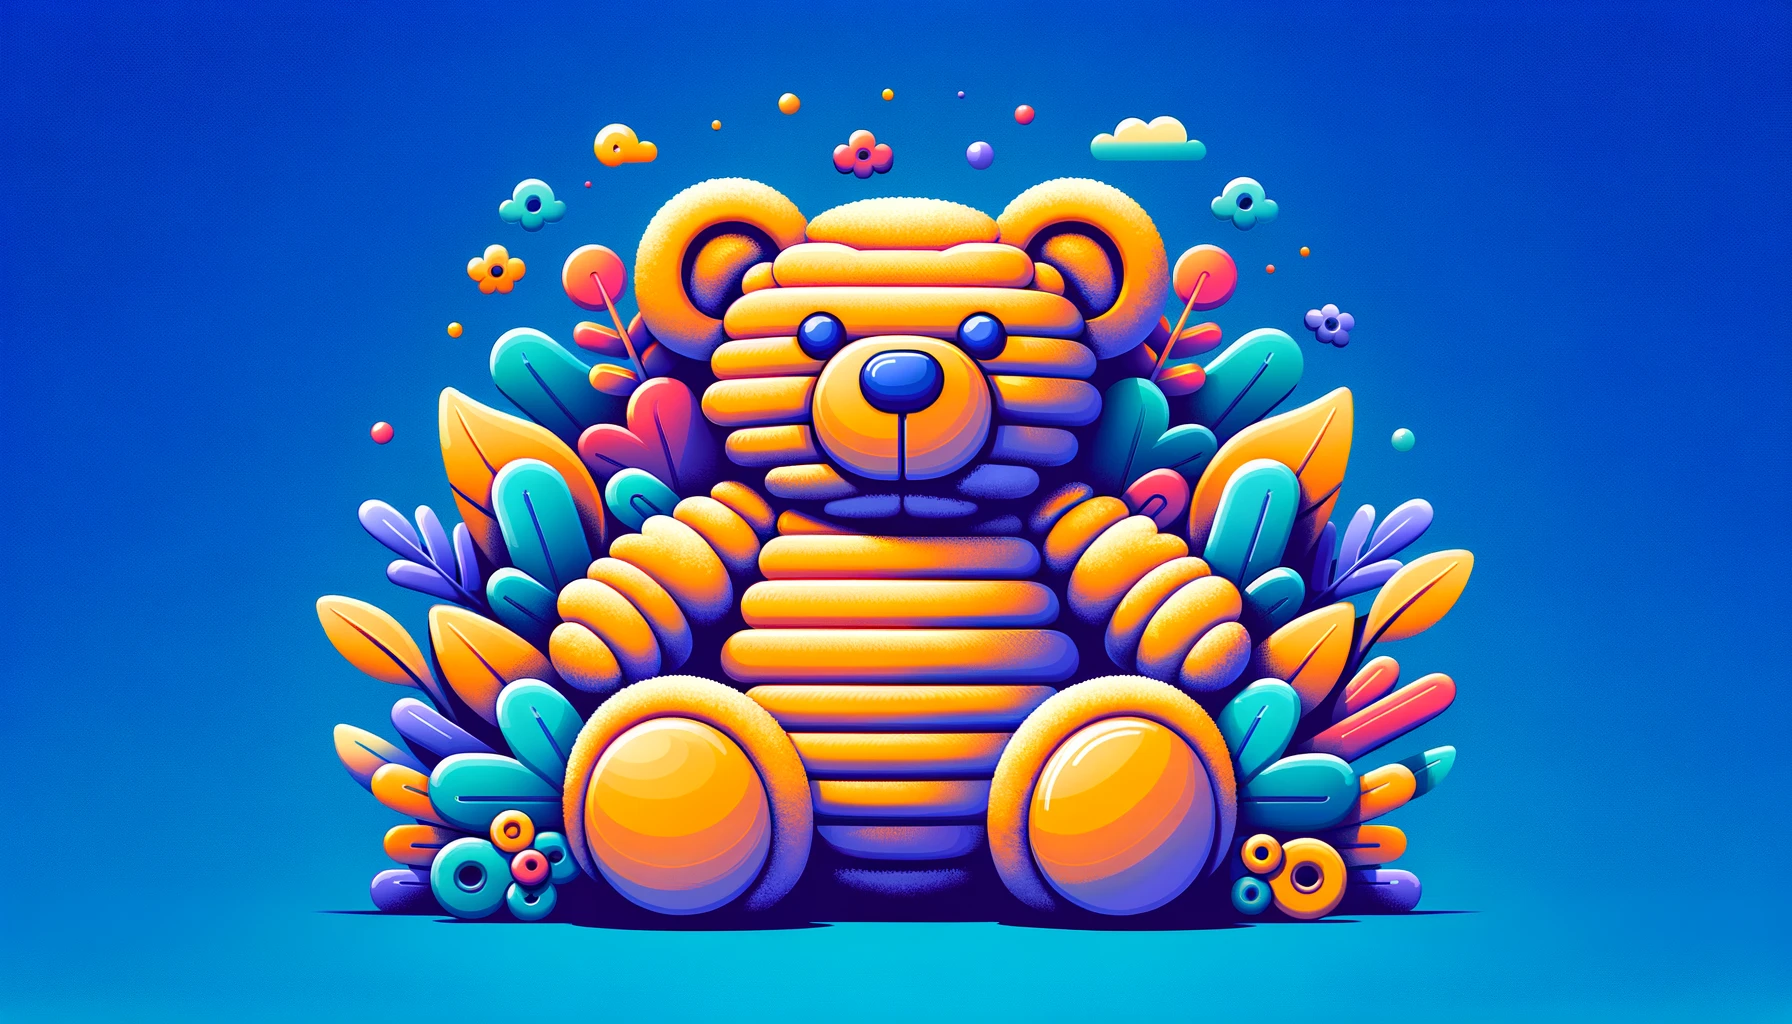 keyword stuffing - overstuffed teddy bear